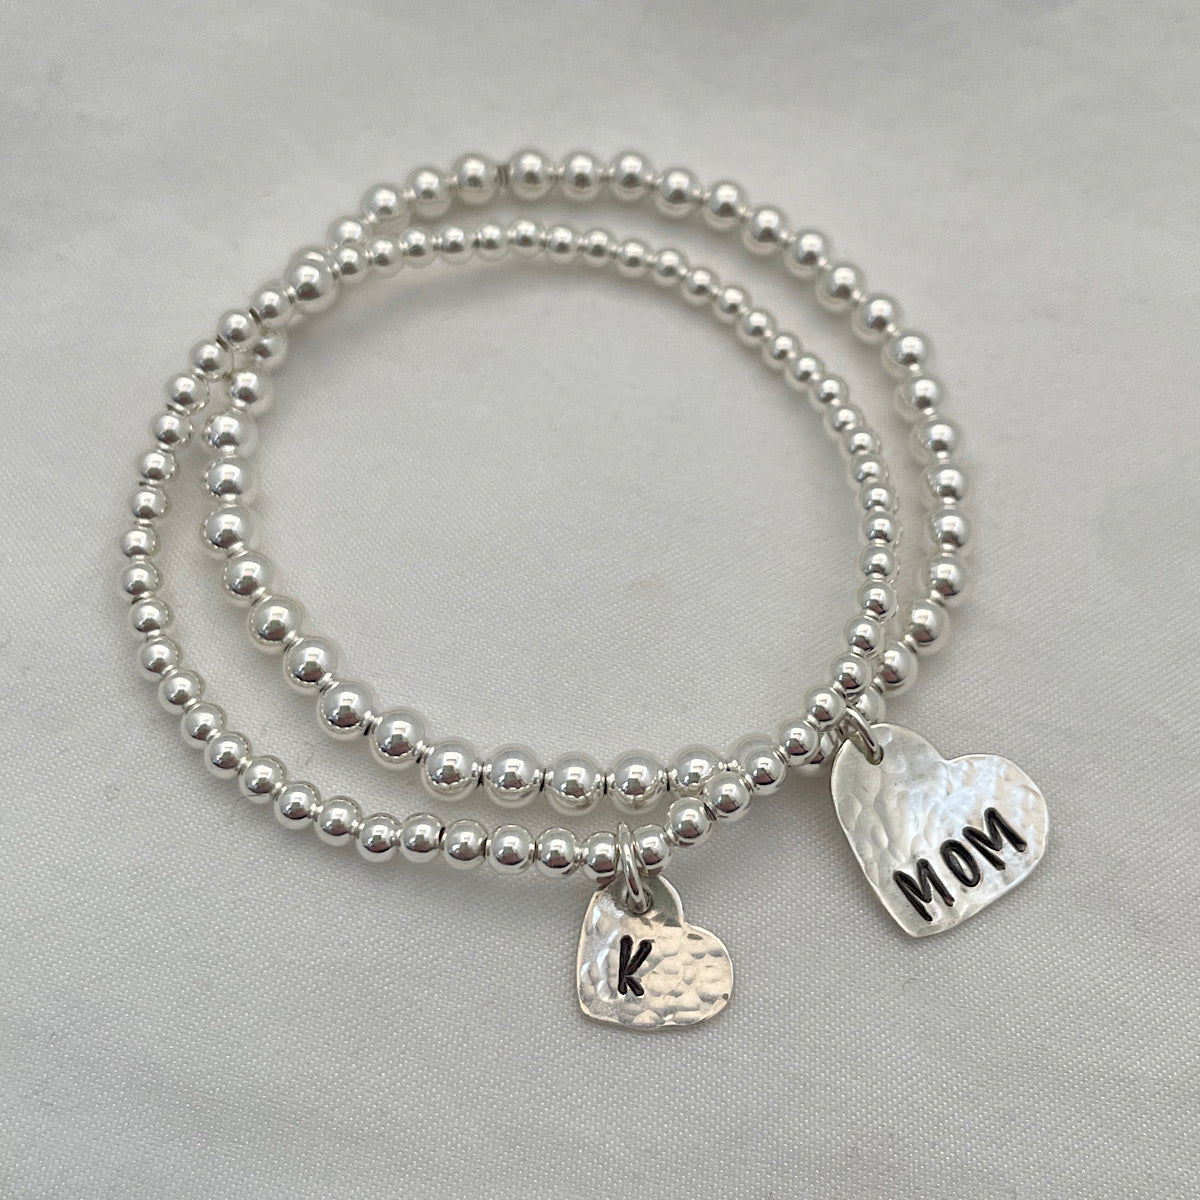 Mini Heart Initial Charm Bead Bracelet Sterling Silver